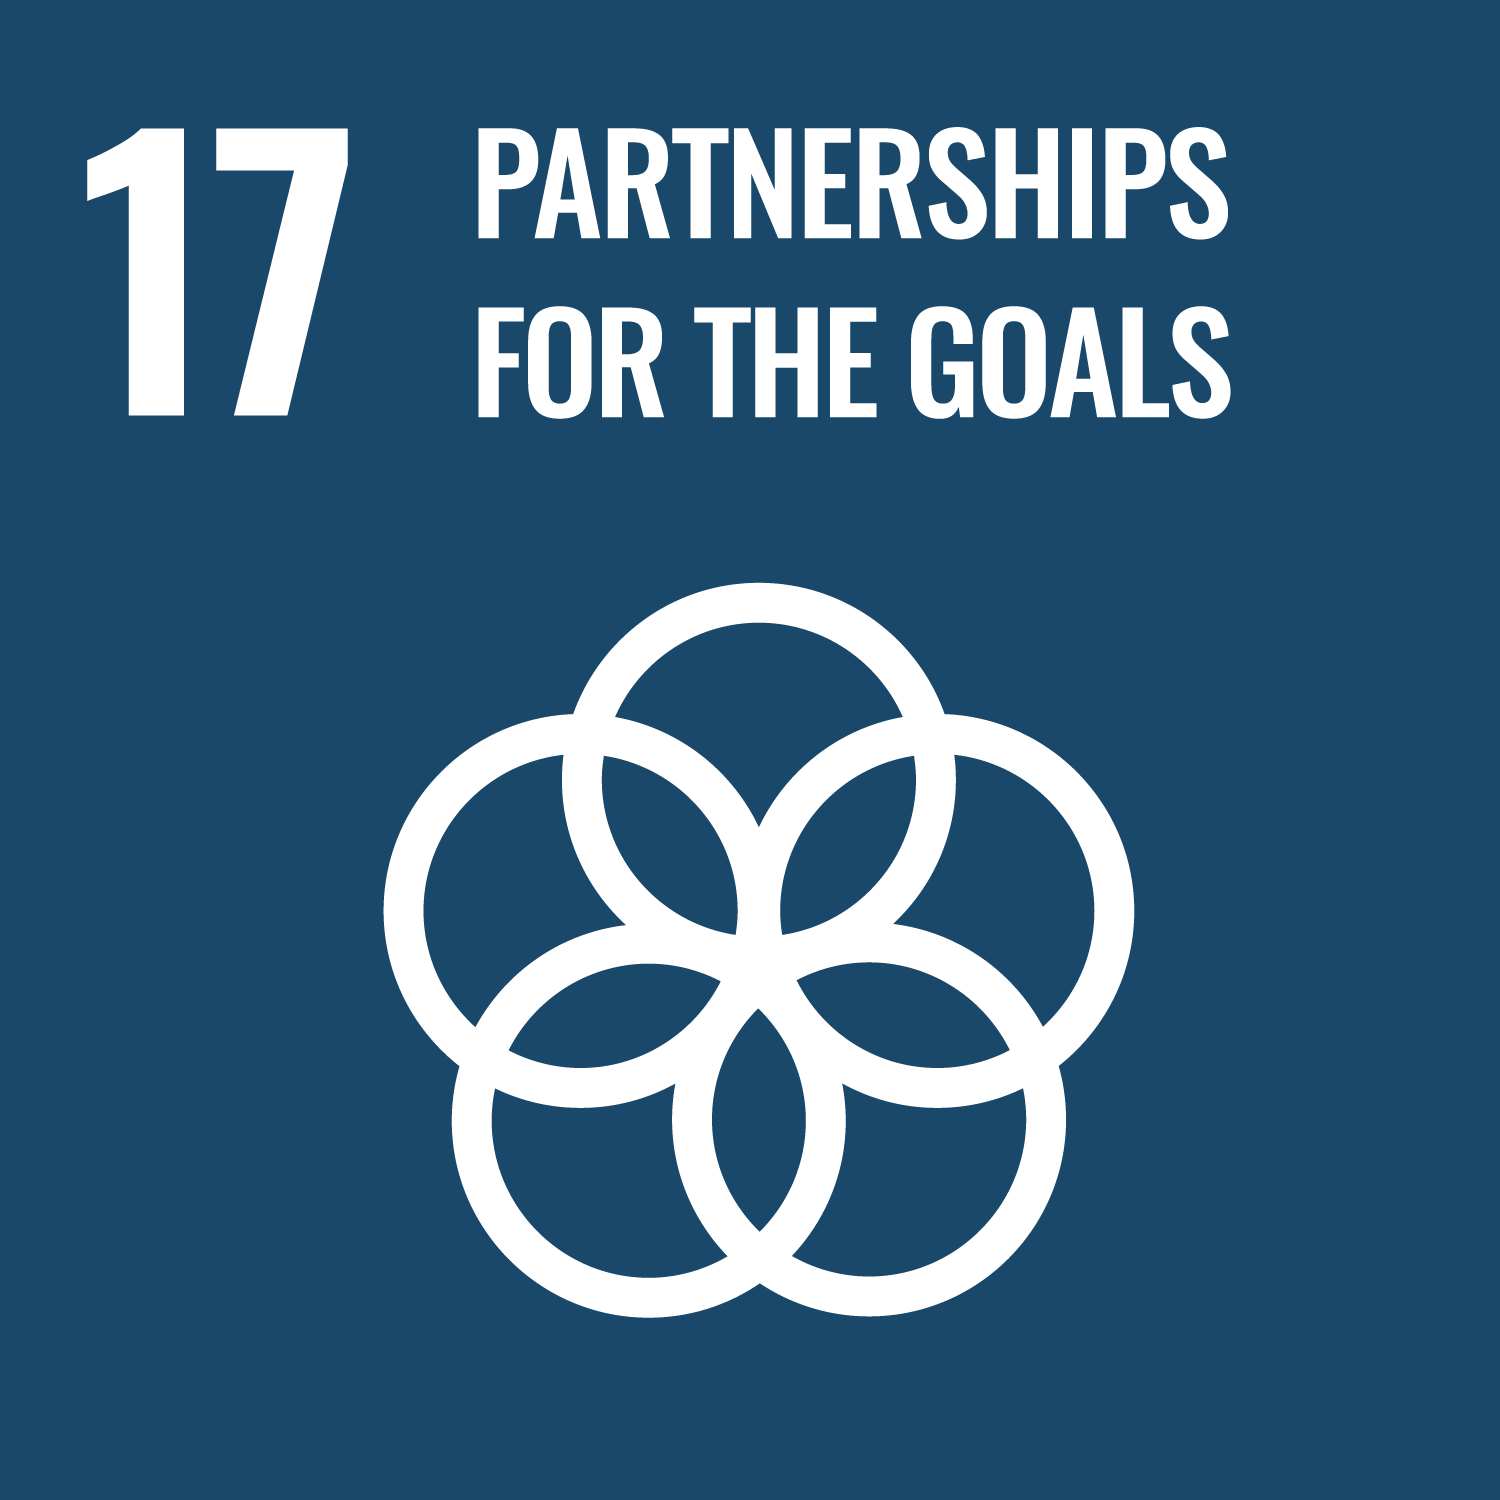 Partnership for Sustainable Development